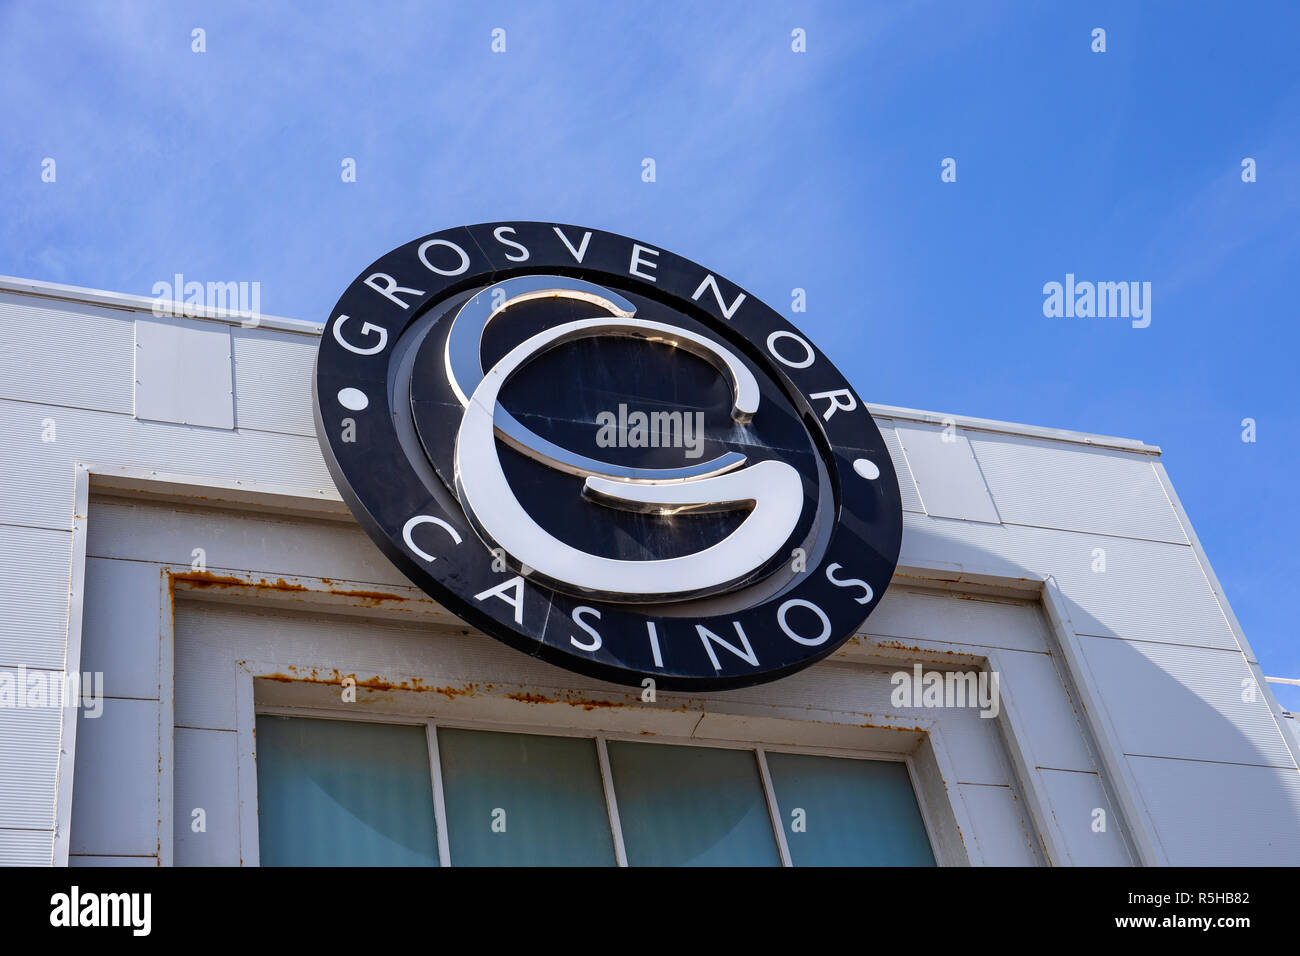 Grosvenor casinos sign on outside wall UK Stock Photo